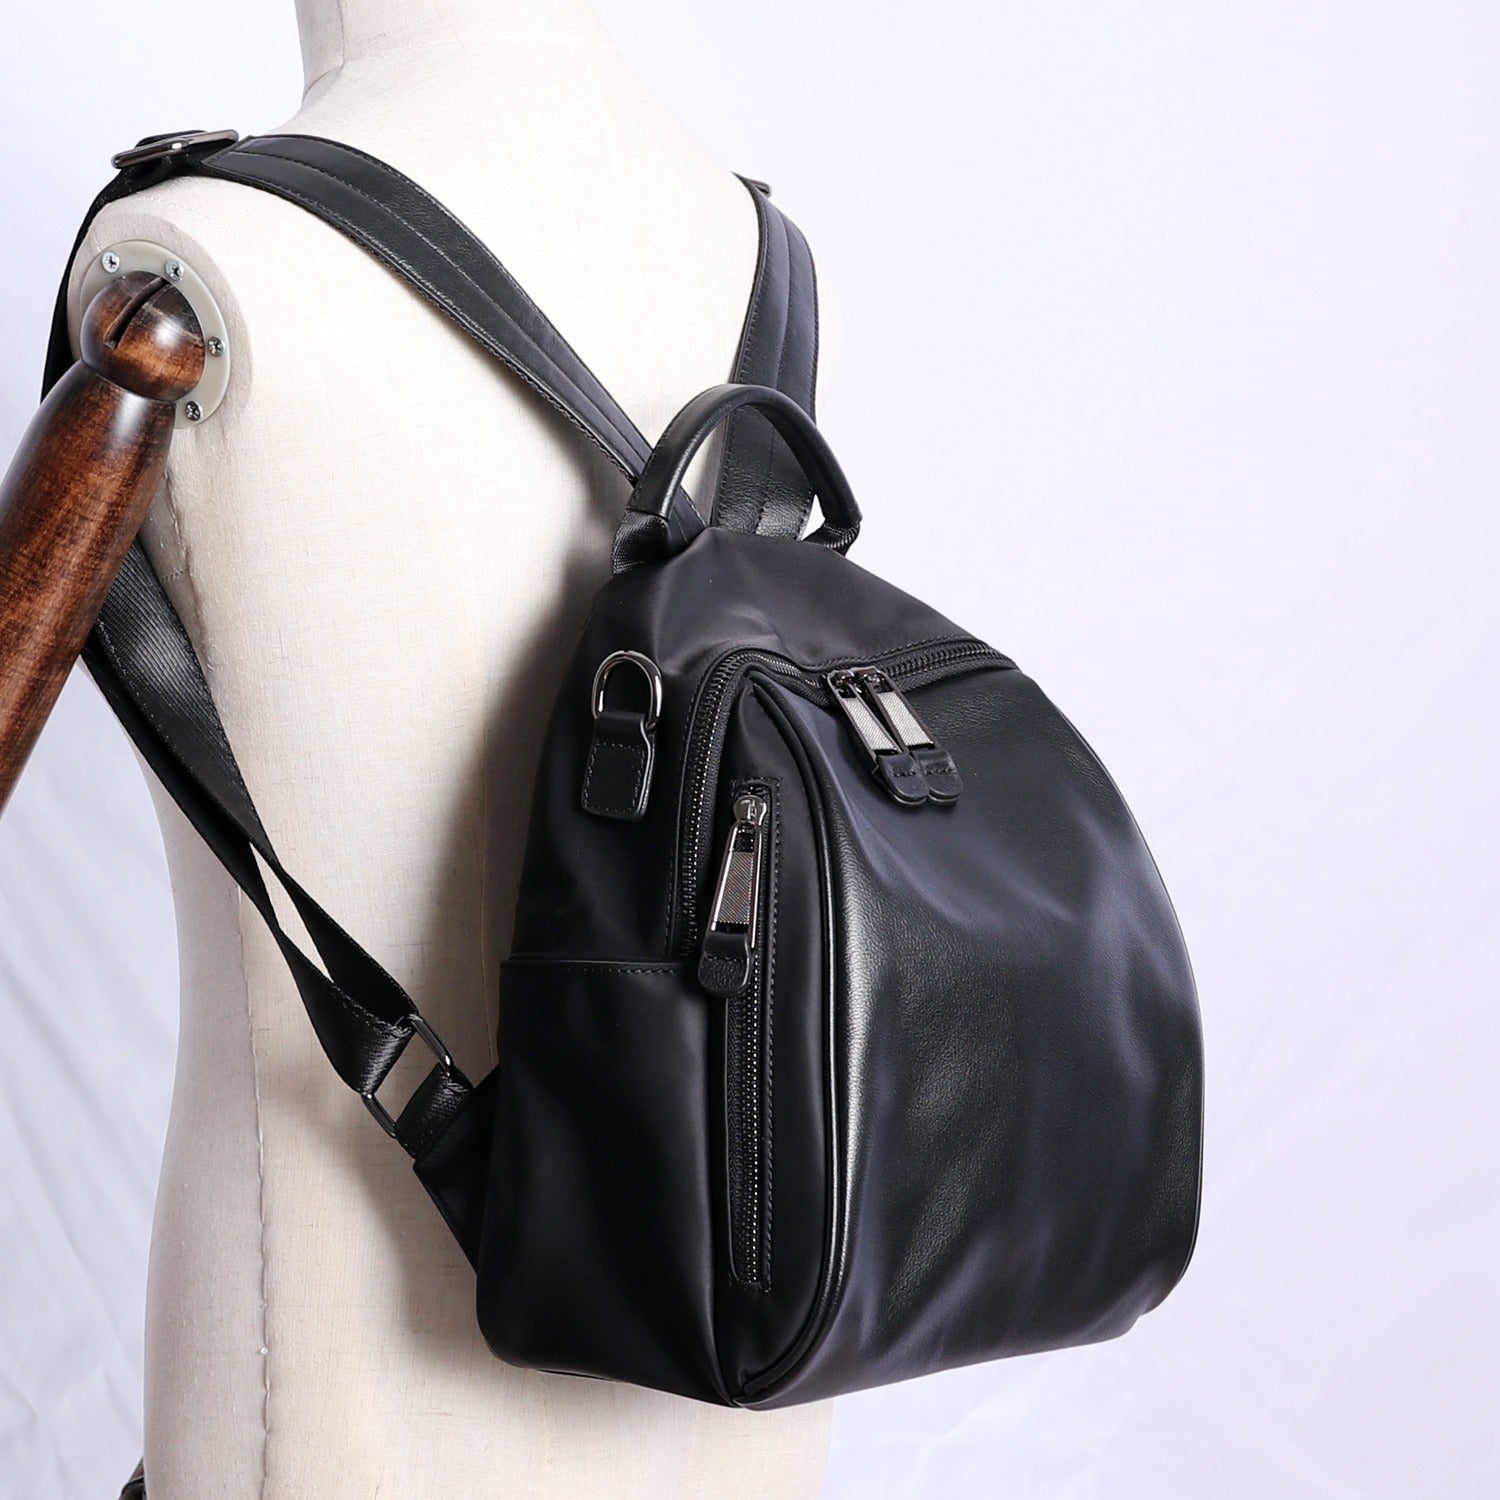 Black Nylon Backpacks Womens Cute School Backpack Purse Black Nylon Leather College Rucksack for Ladies